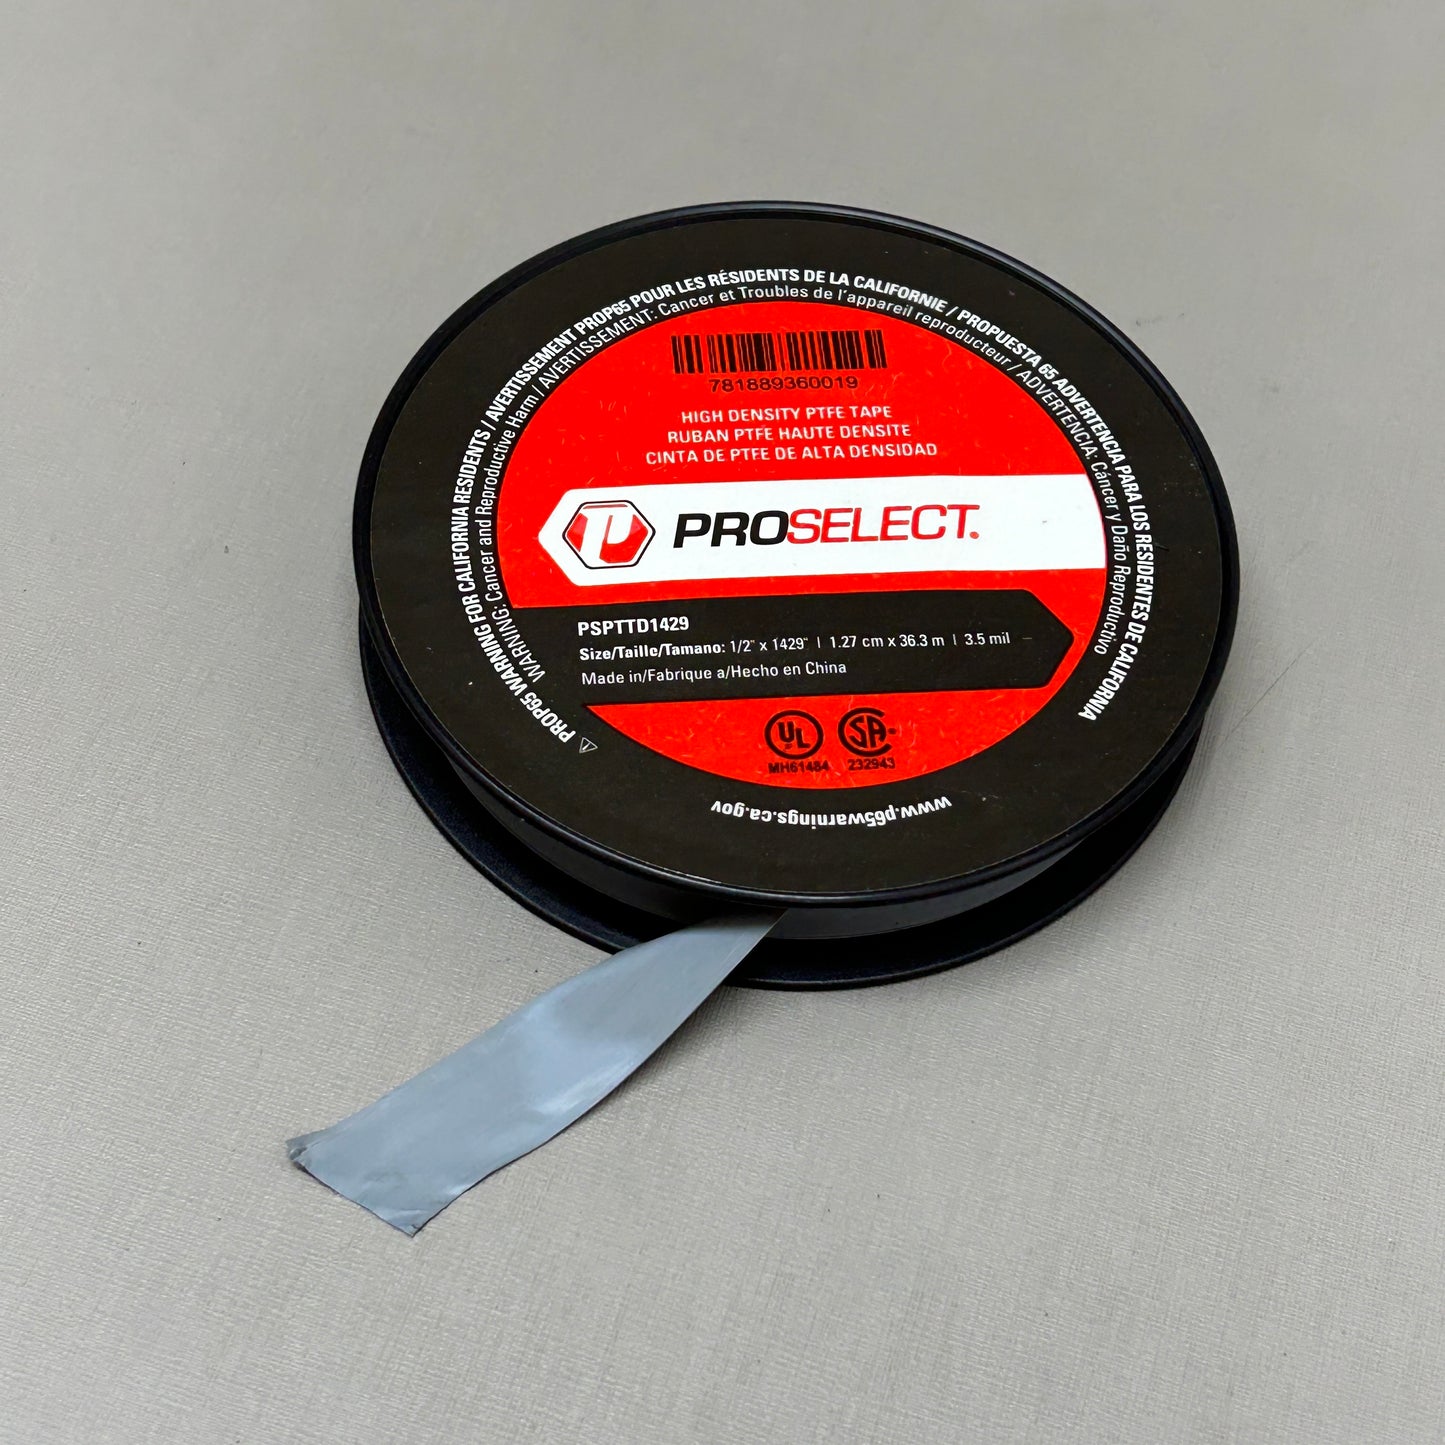 PROSELECT 5 Pack! ptfe Teflon Seal Thread Tape 1/2" x 1429" Gray PSPTTD1429 (New)